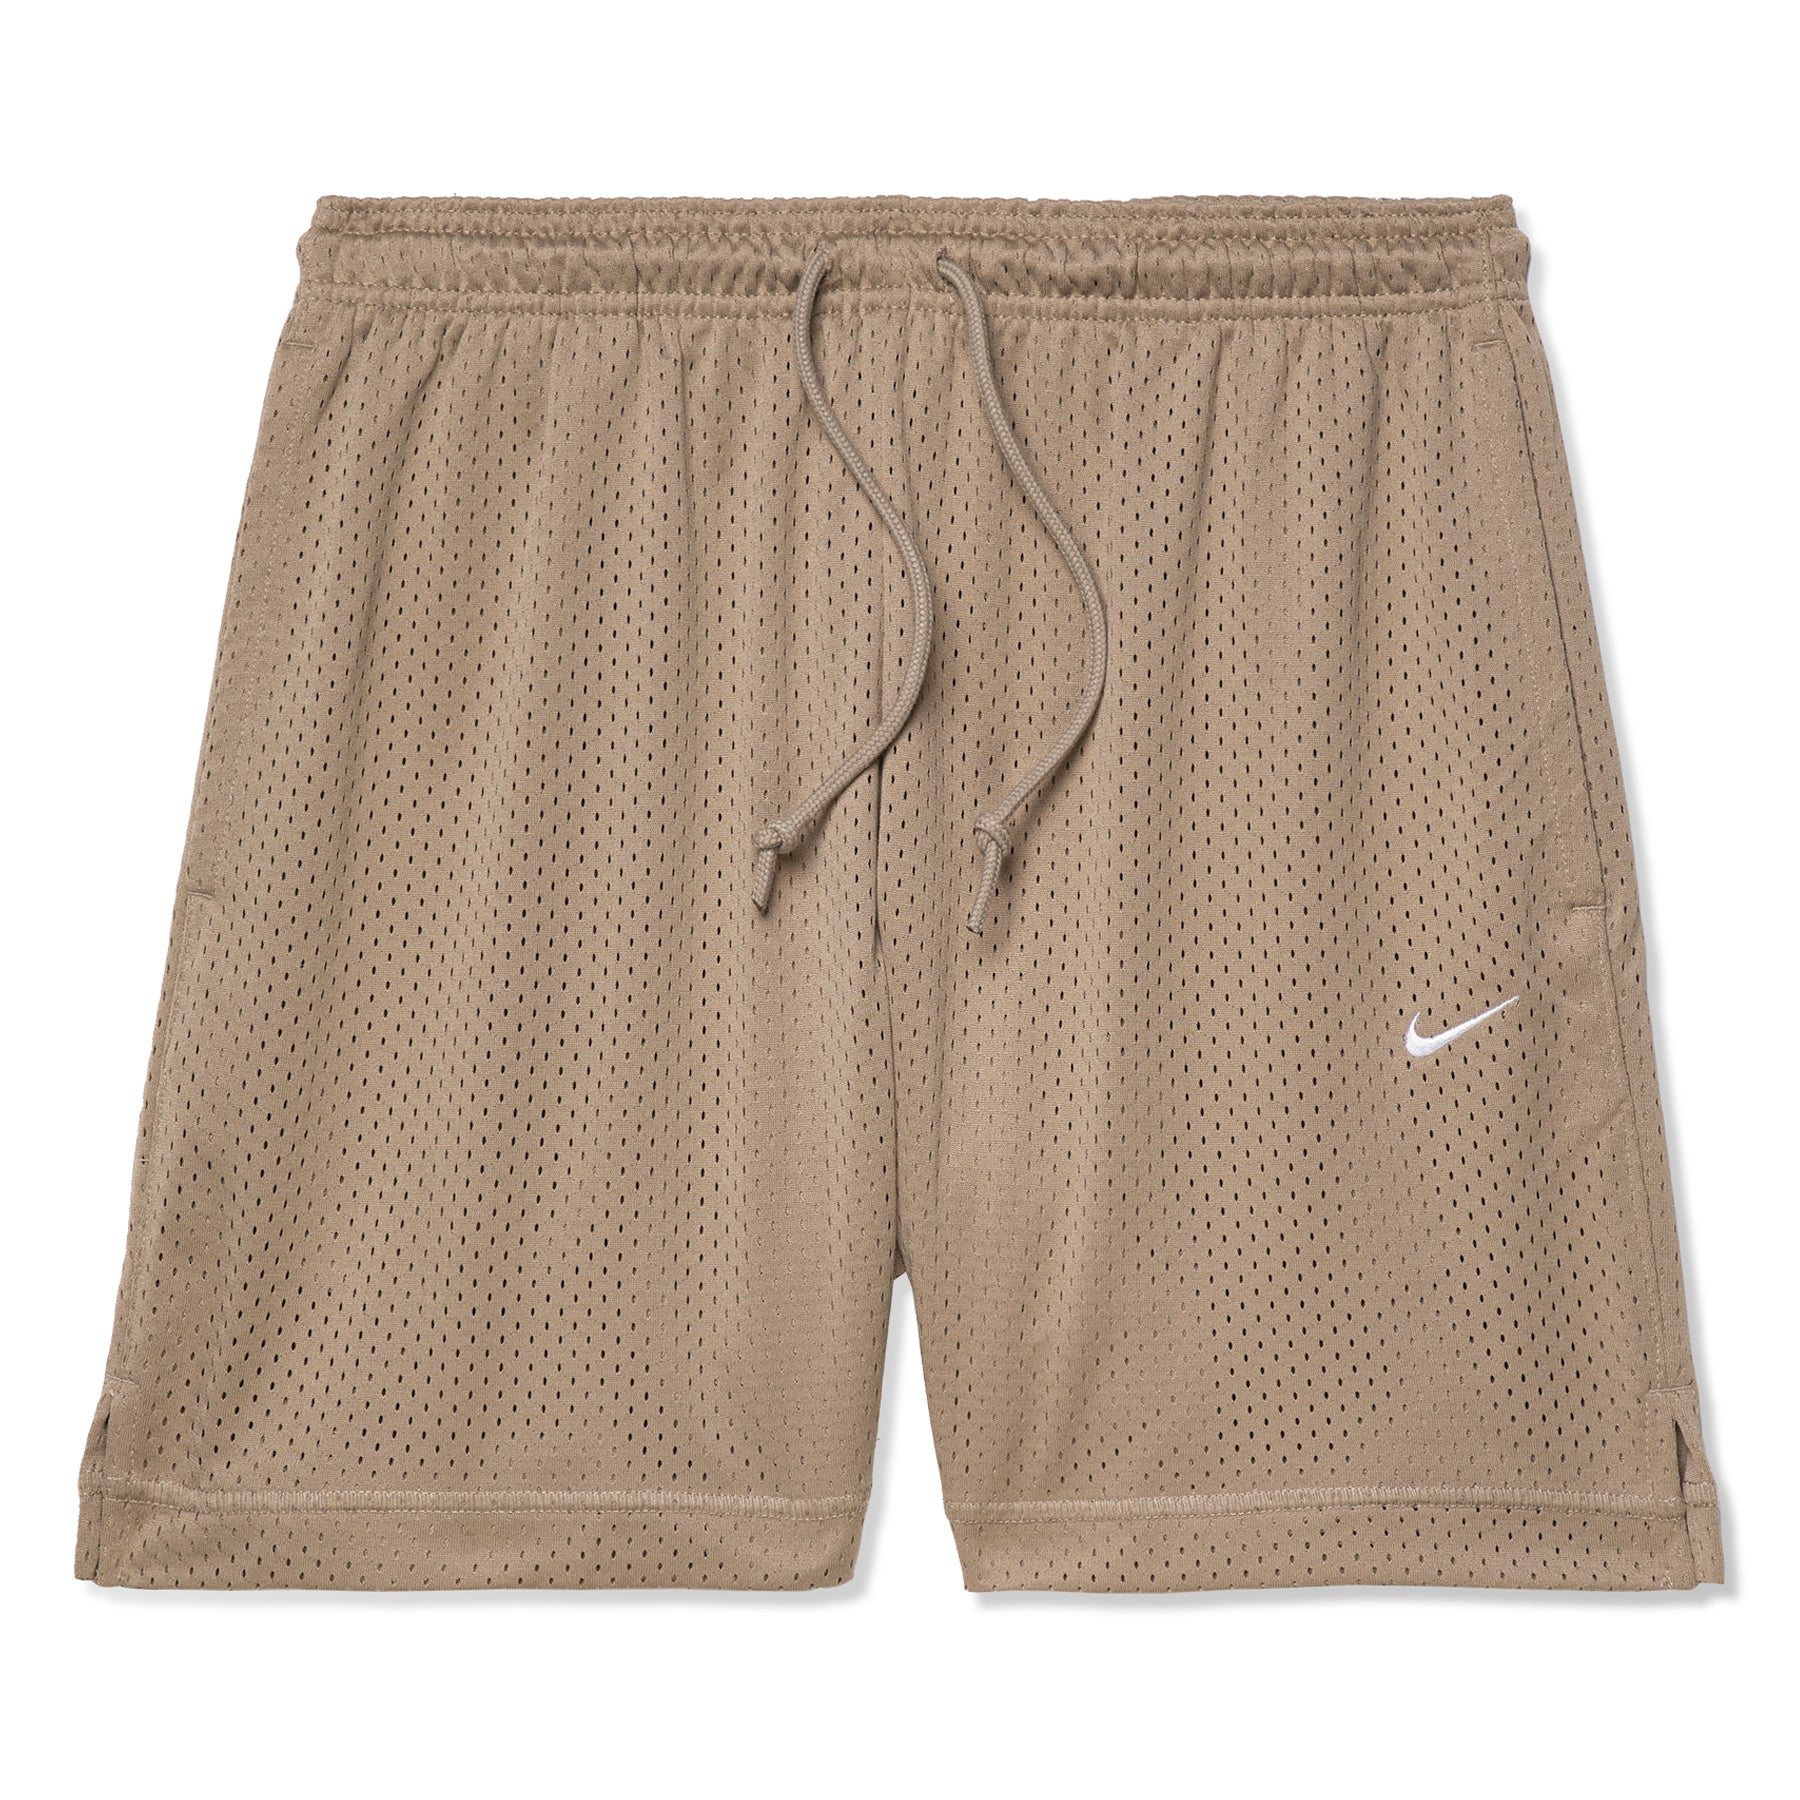 – Sportswear Shorts Concepts Mesh (Khaki/White) Nike